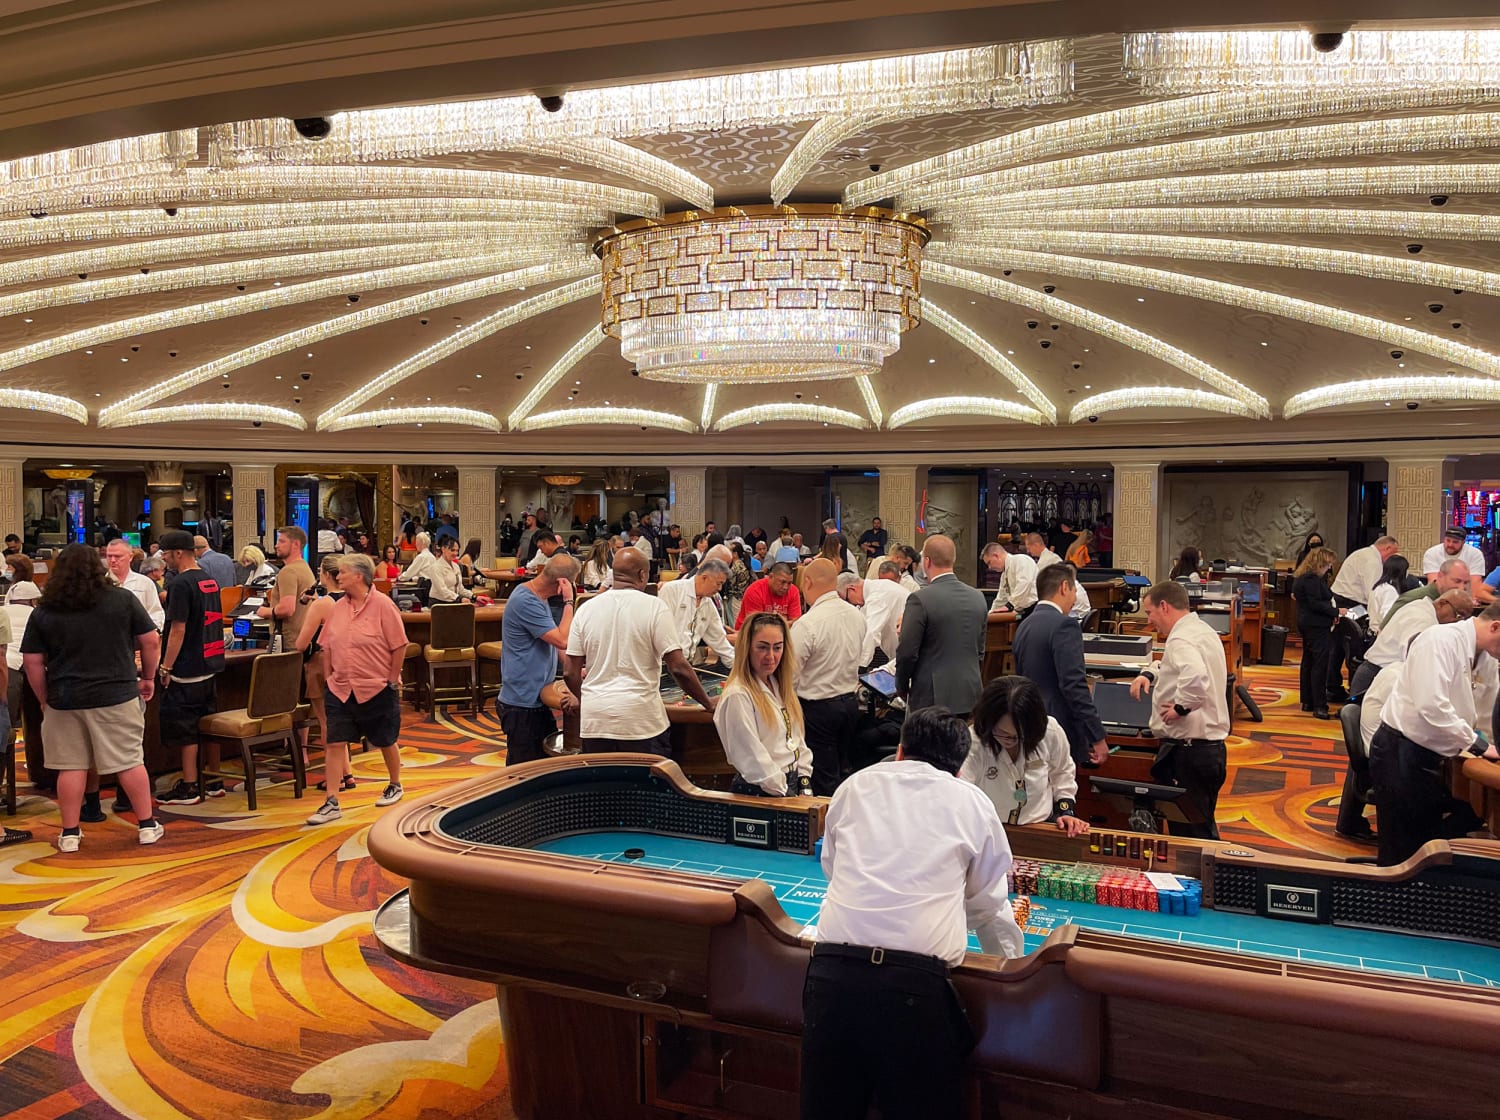 Staying at CAESARS PALACE Las Vegas Hotel & Casino in 2023 